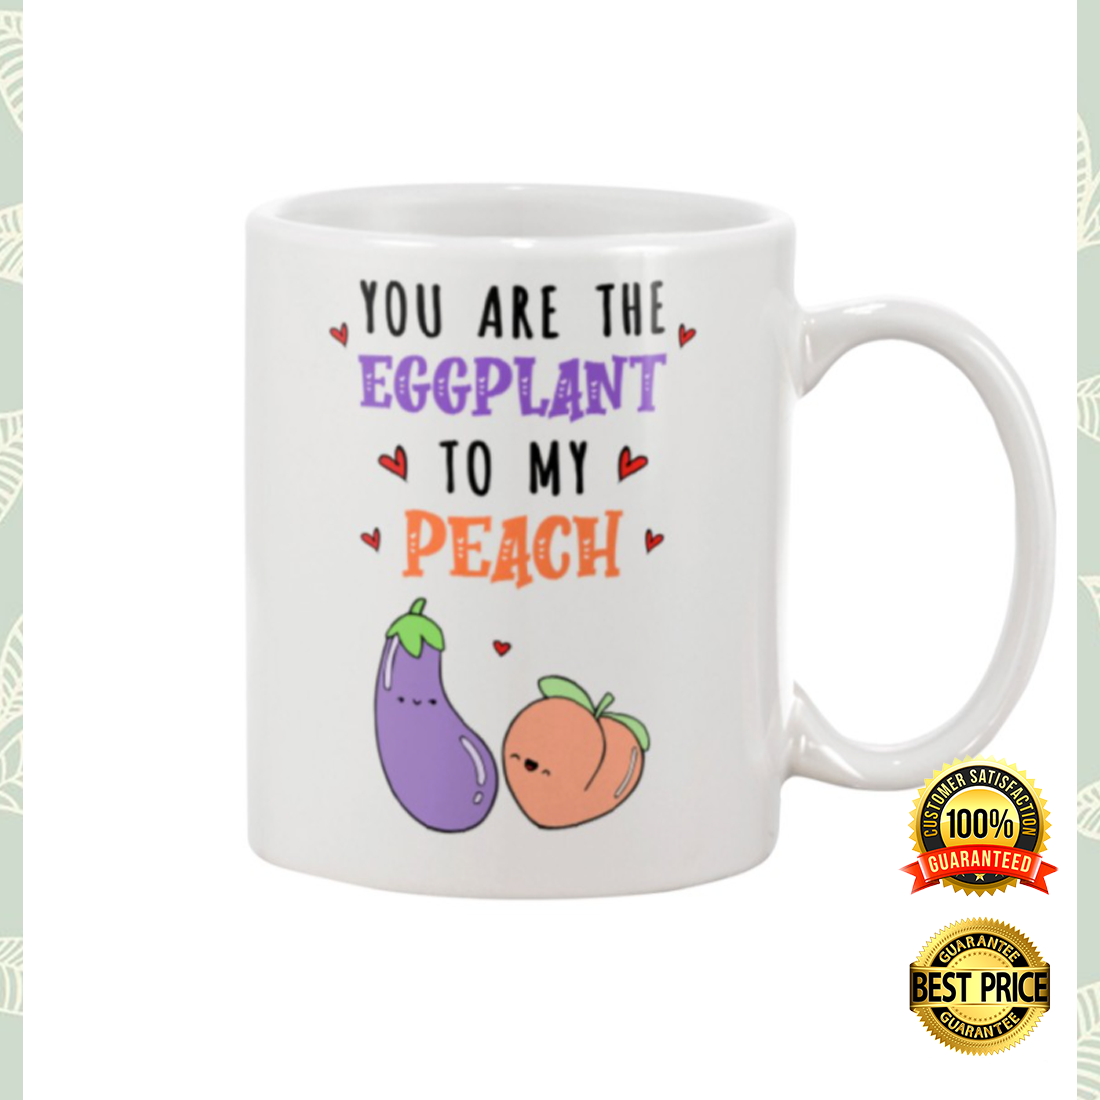 You are the eggplant to my peach mug 3